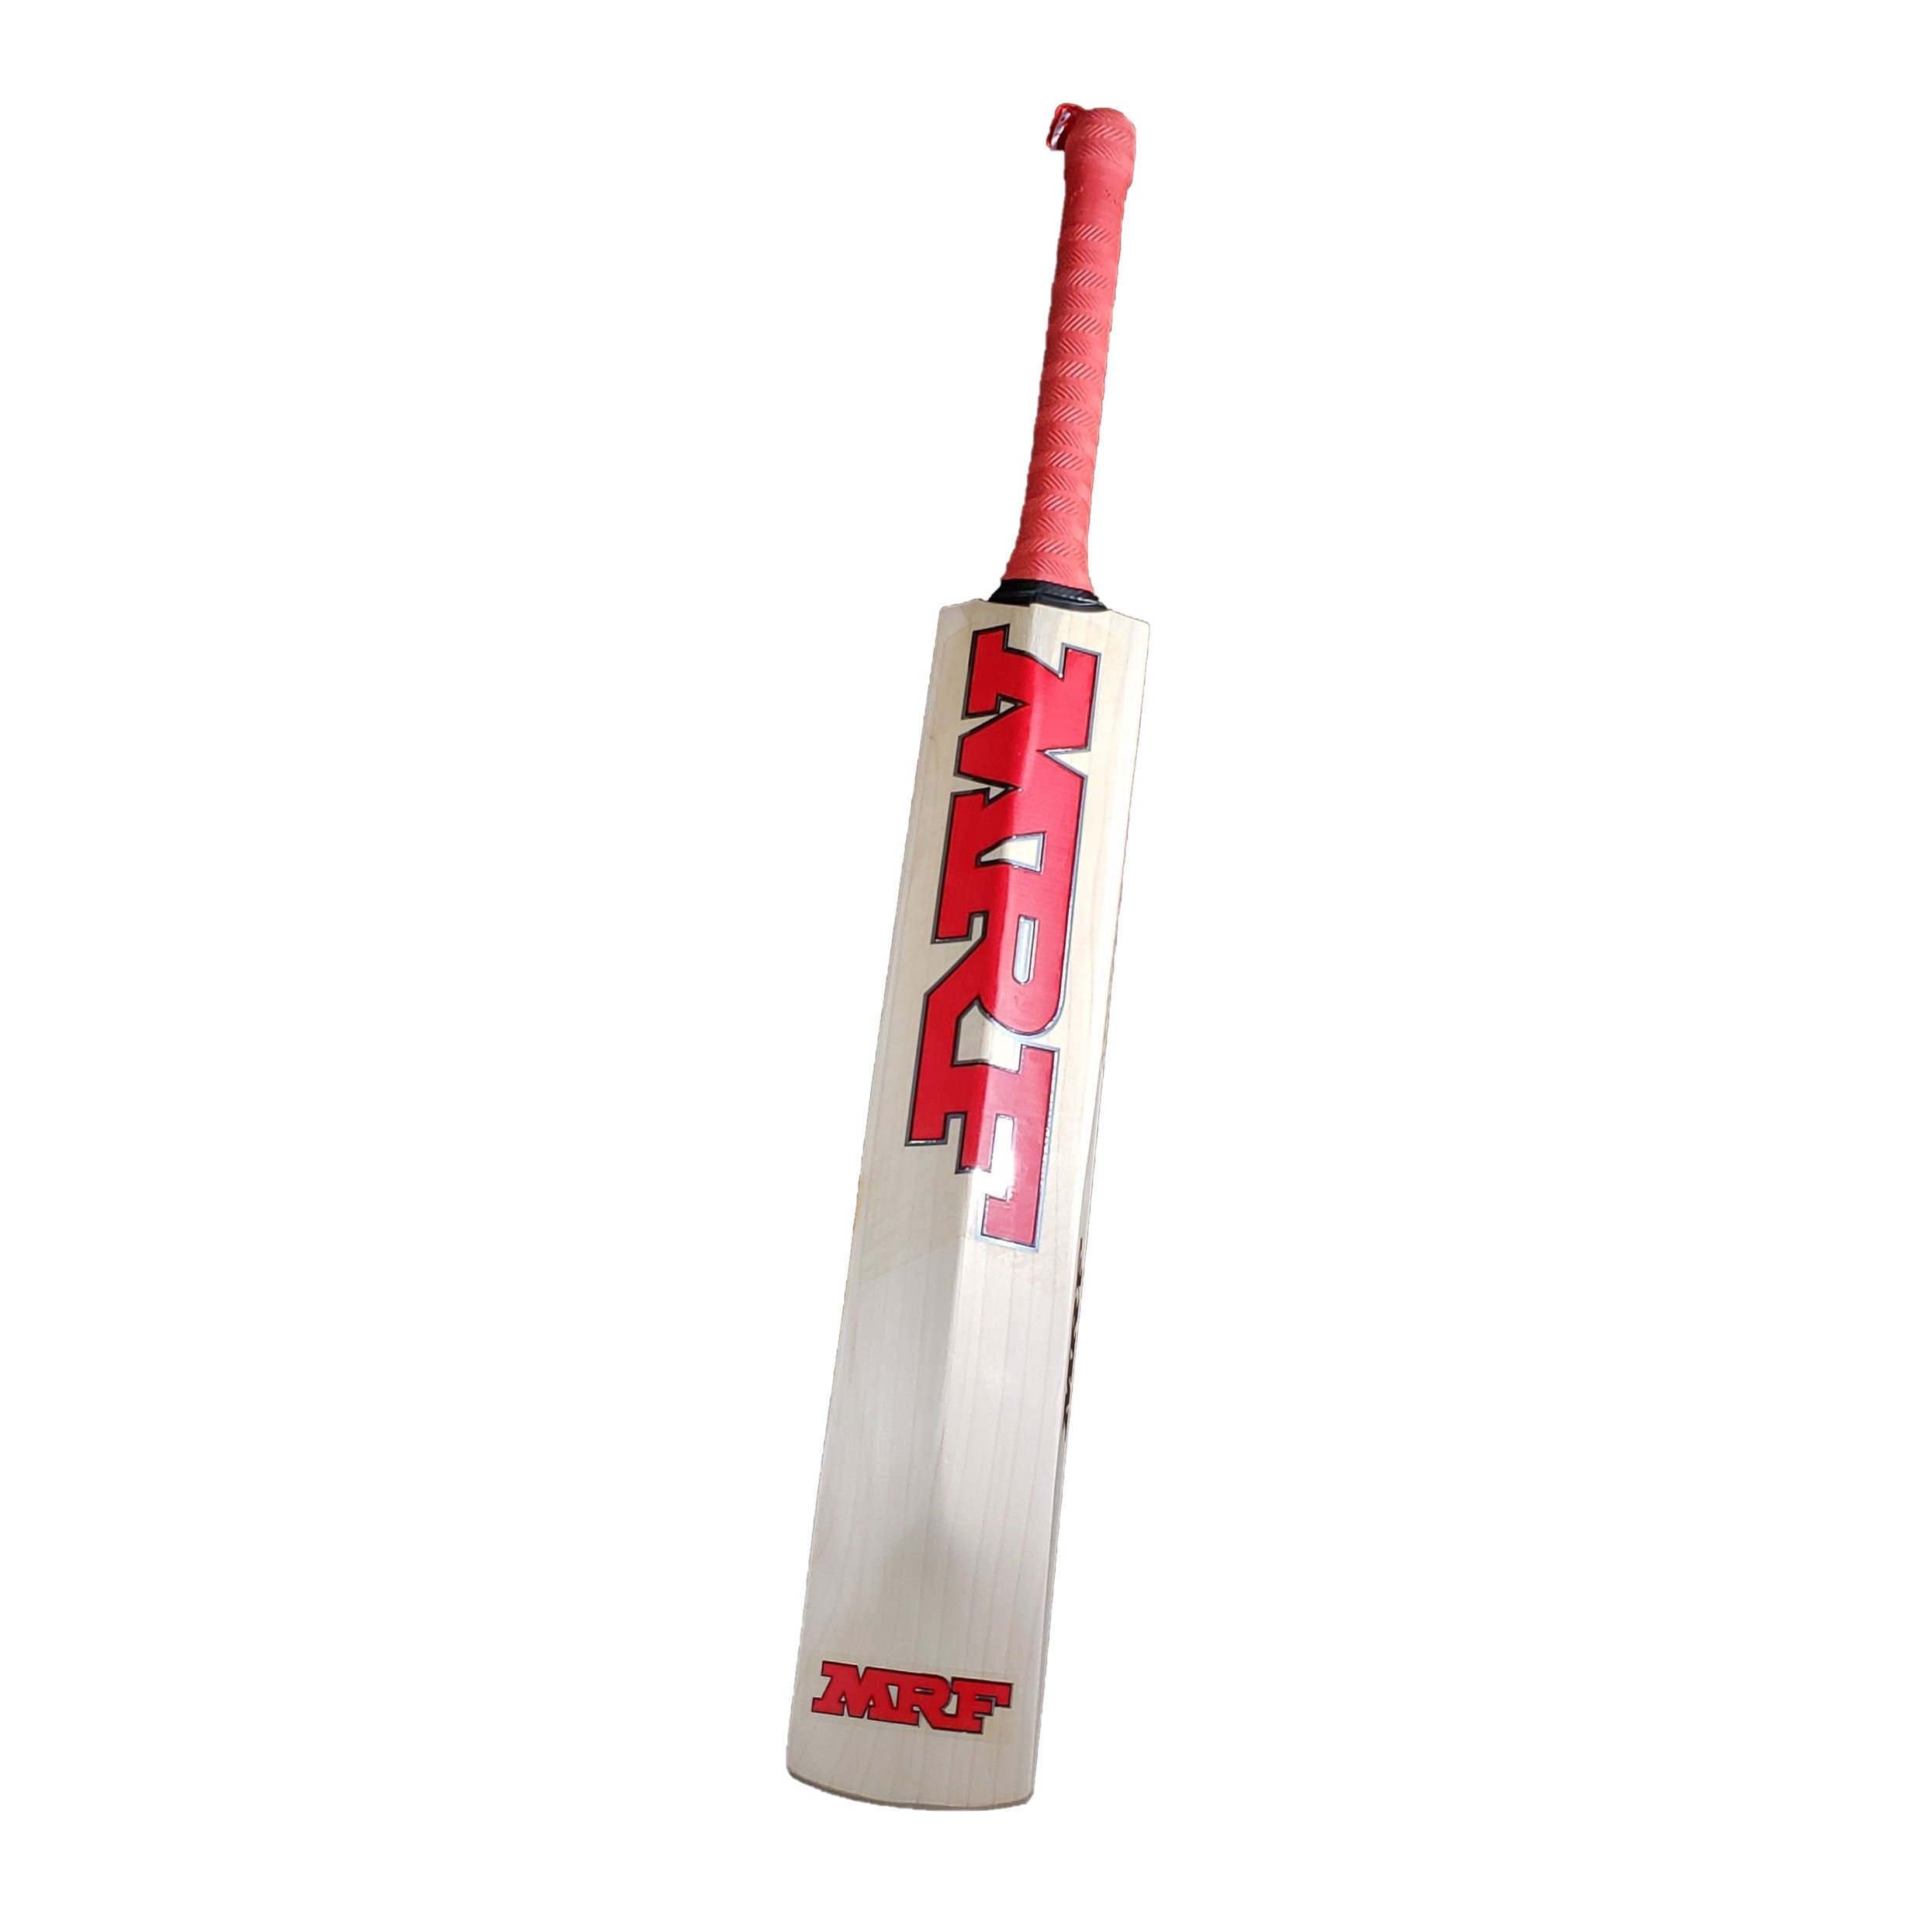 MRF Legend VK18 1.0 Virat Kohli Edition Cricket Bat